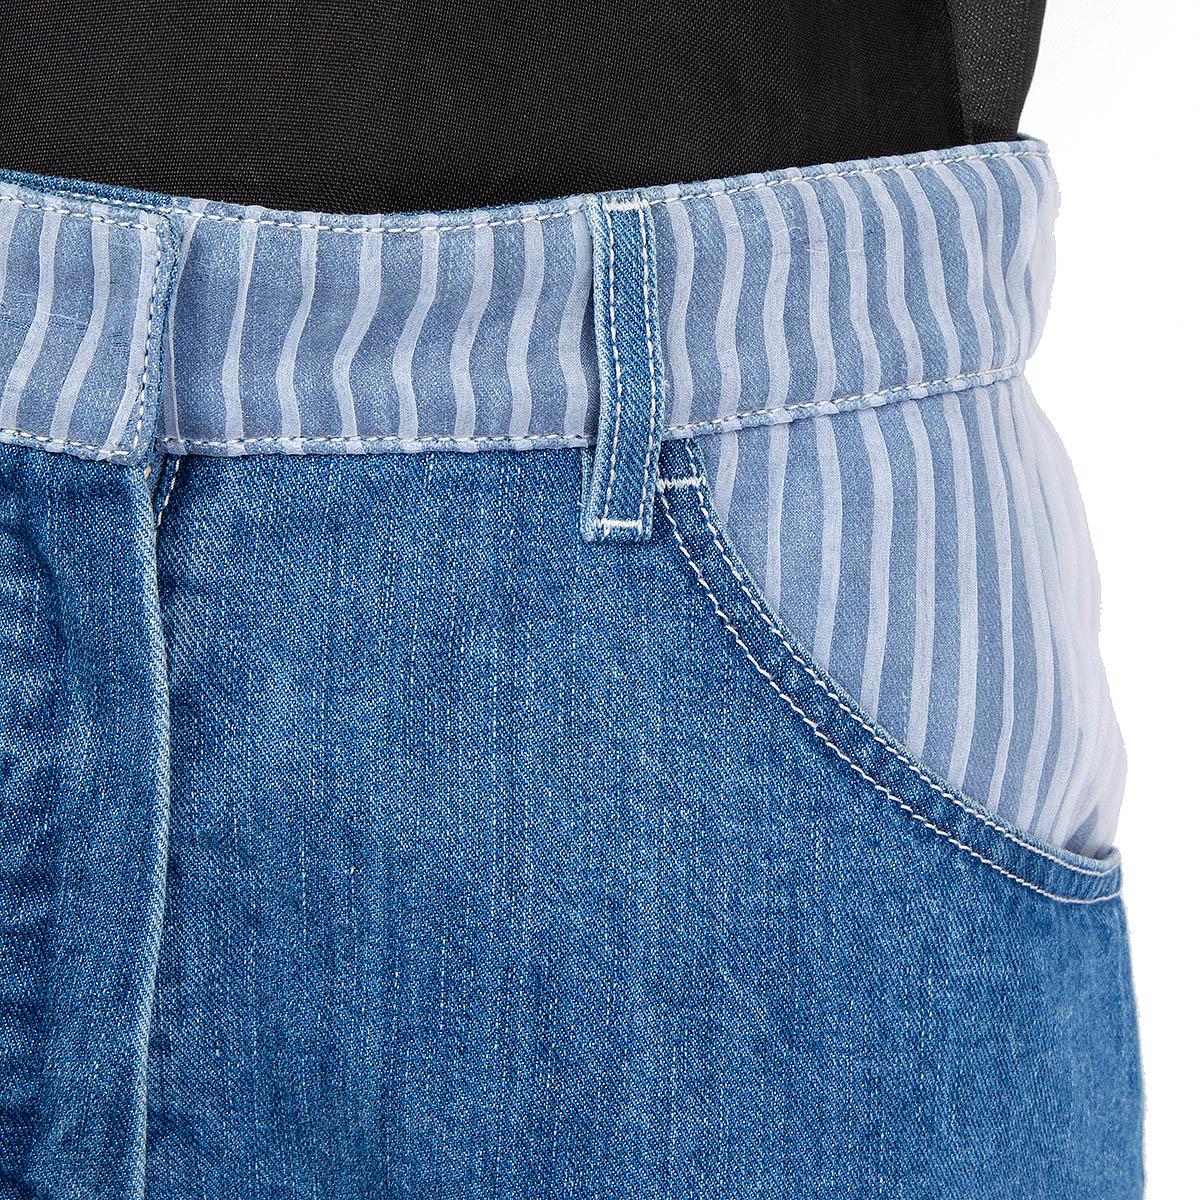 CHANLE Indigoblaue Baumwolle 2014 STRIPED DENIM HOT PANTS Shorts 36 XS im Angebot 2